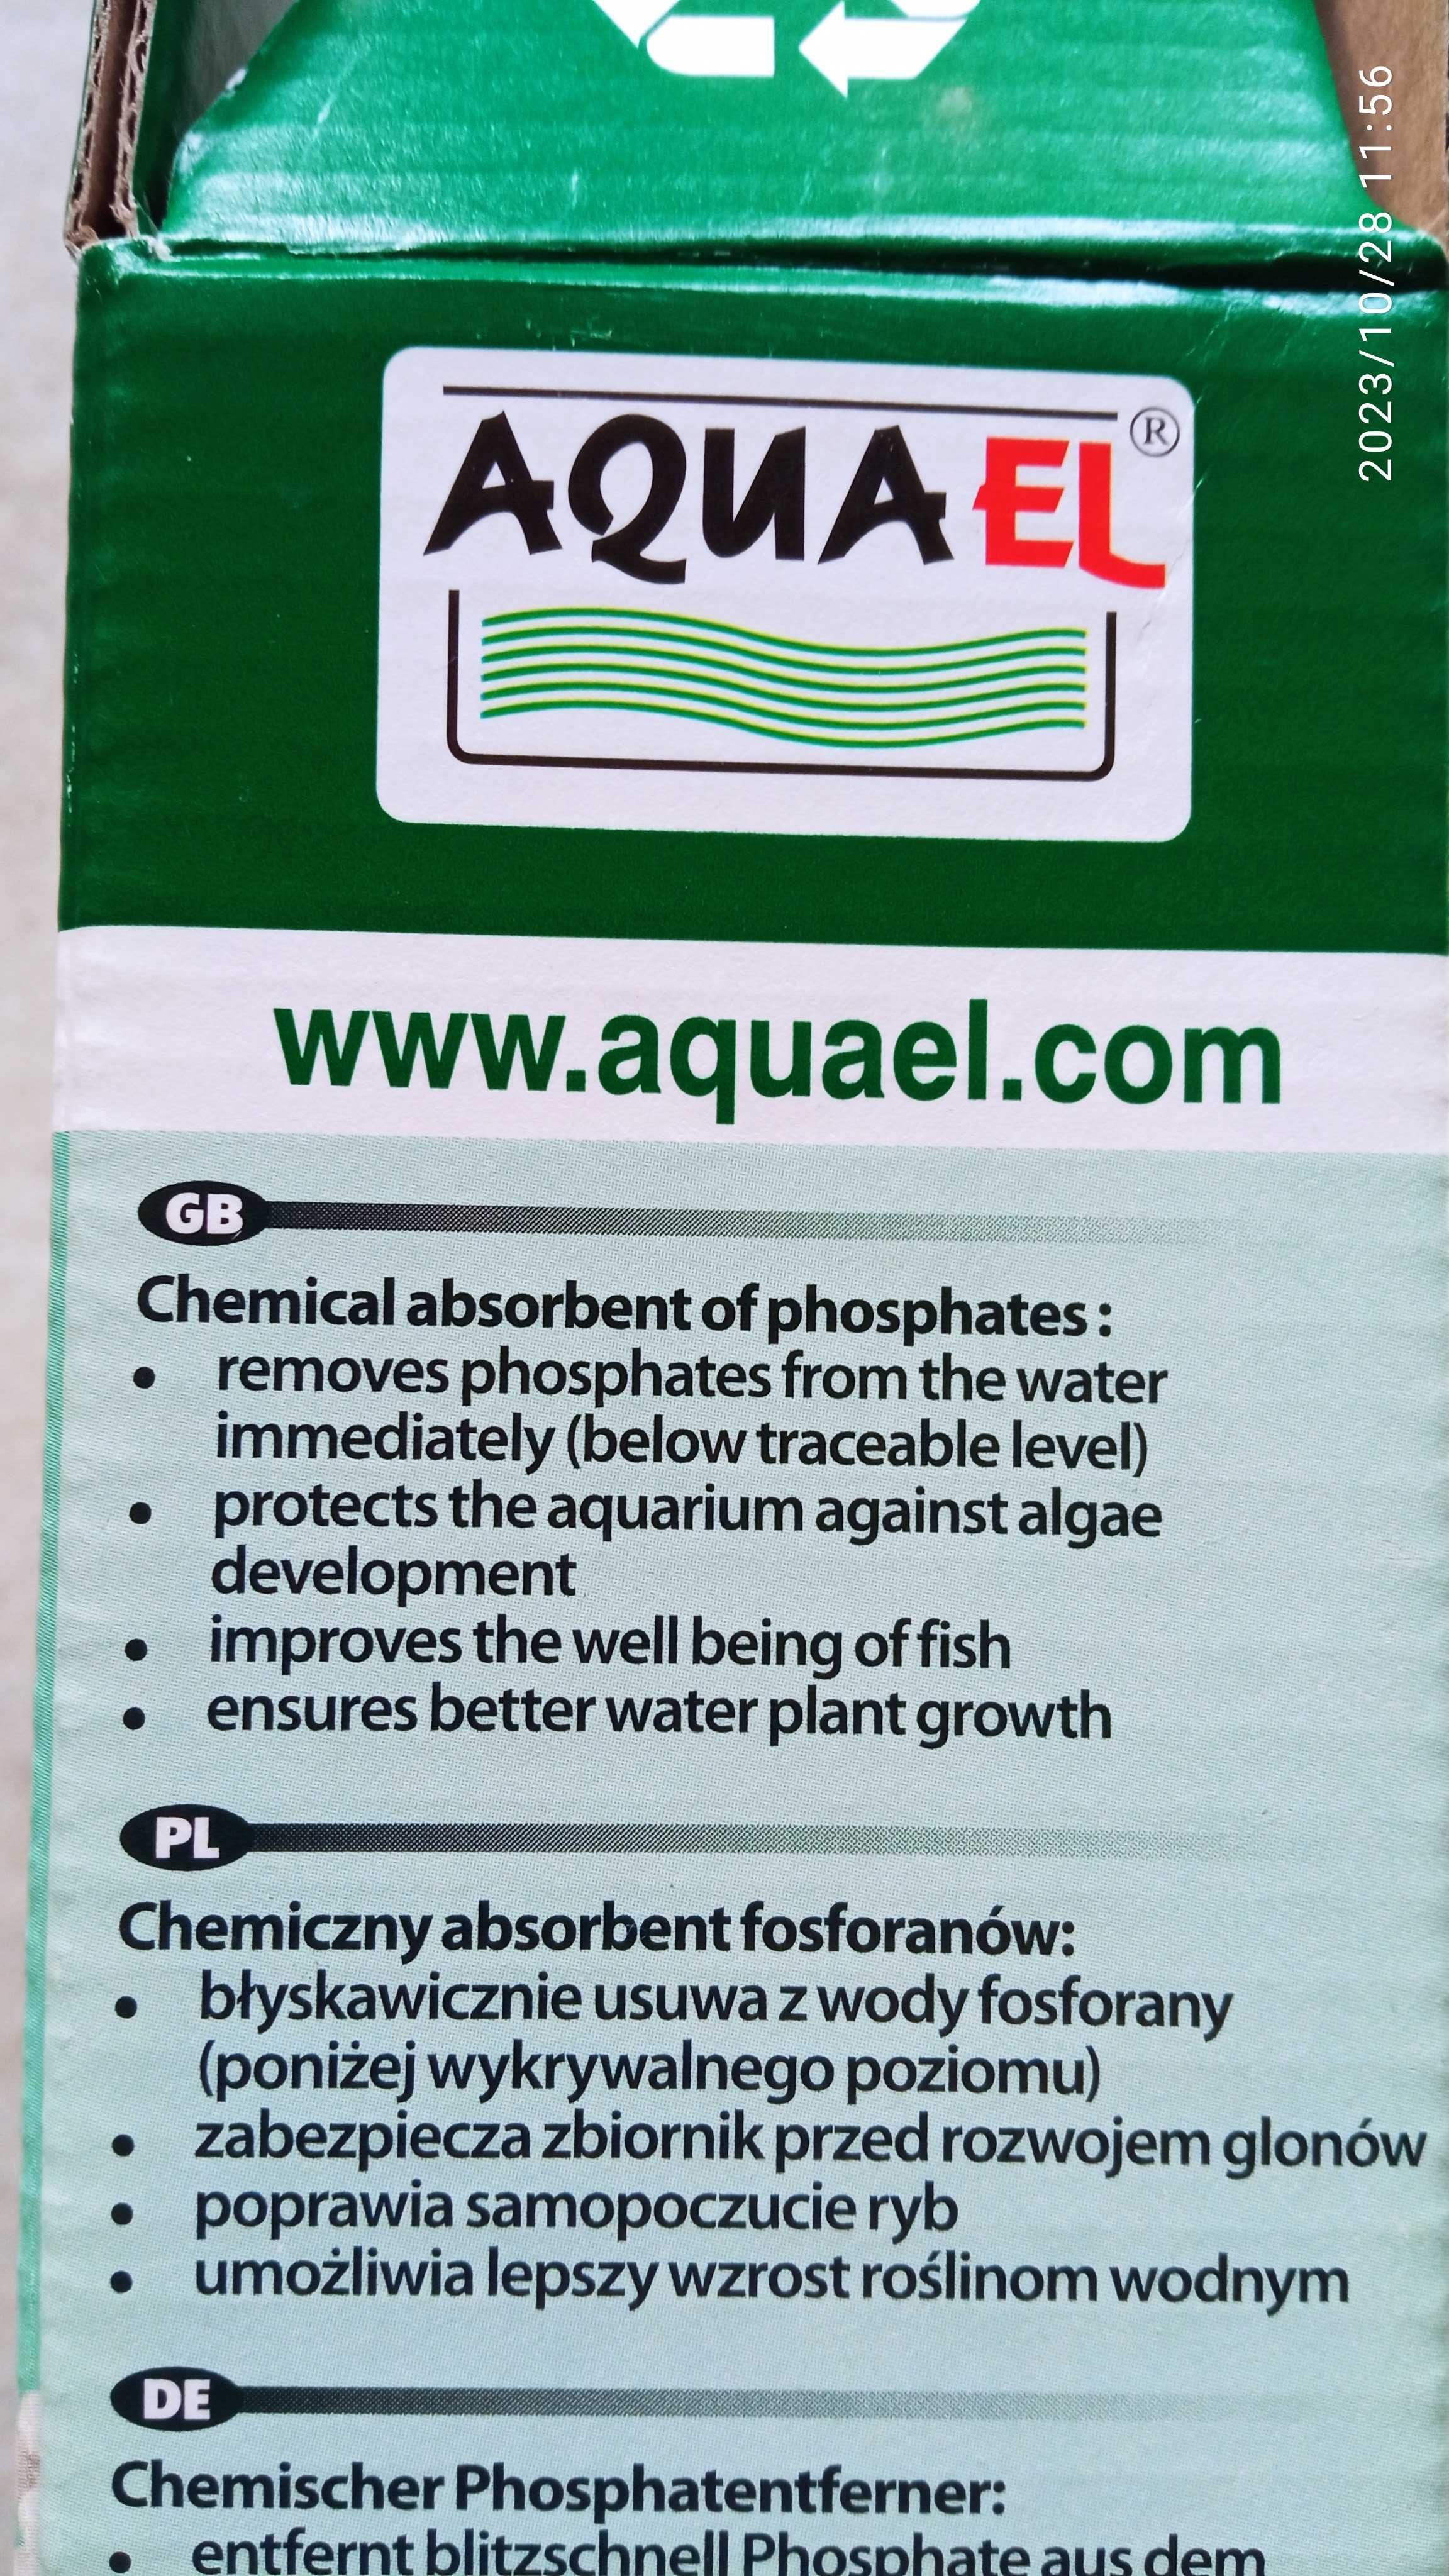 PhosMax Basic Aquael absorbent fosforanów 1 litr